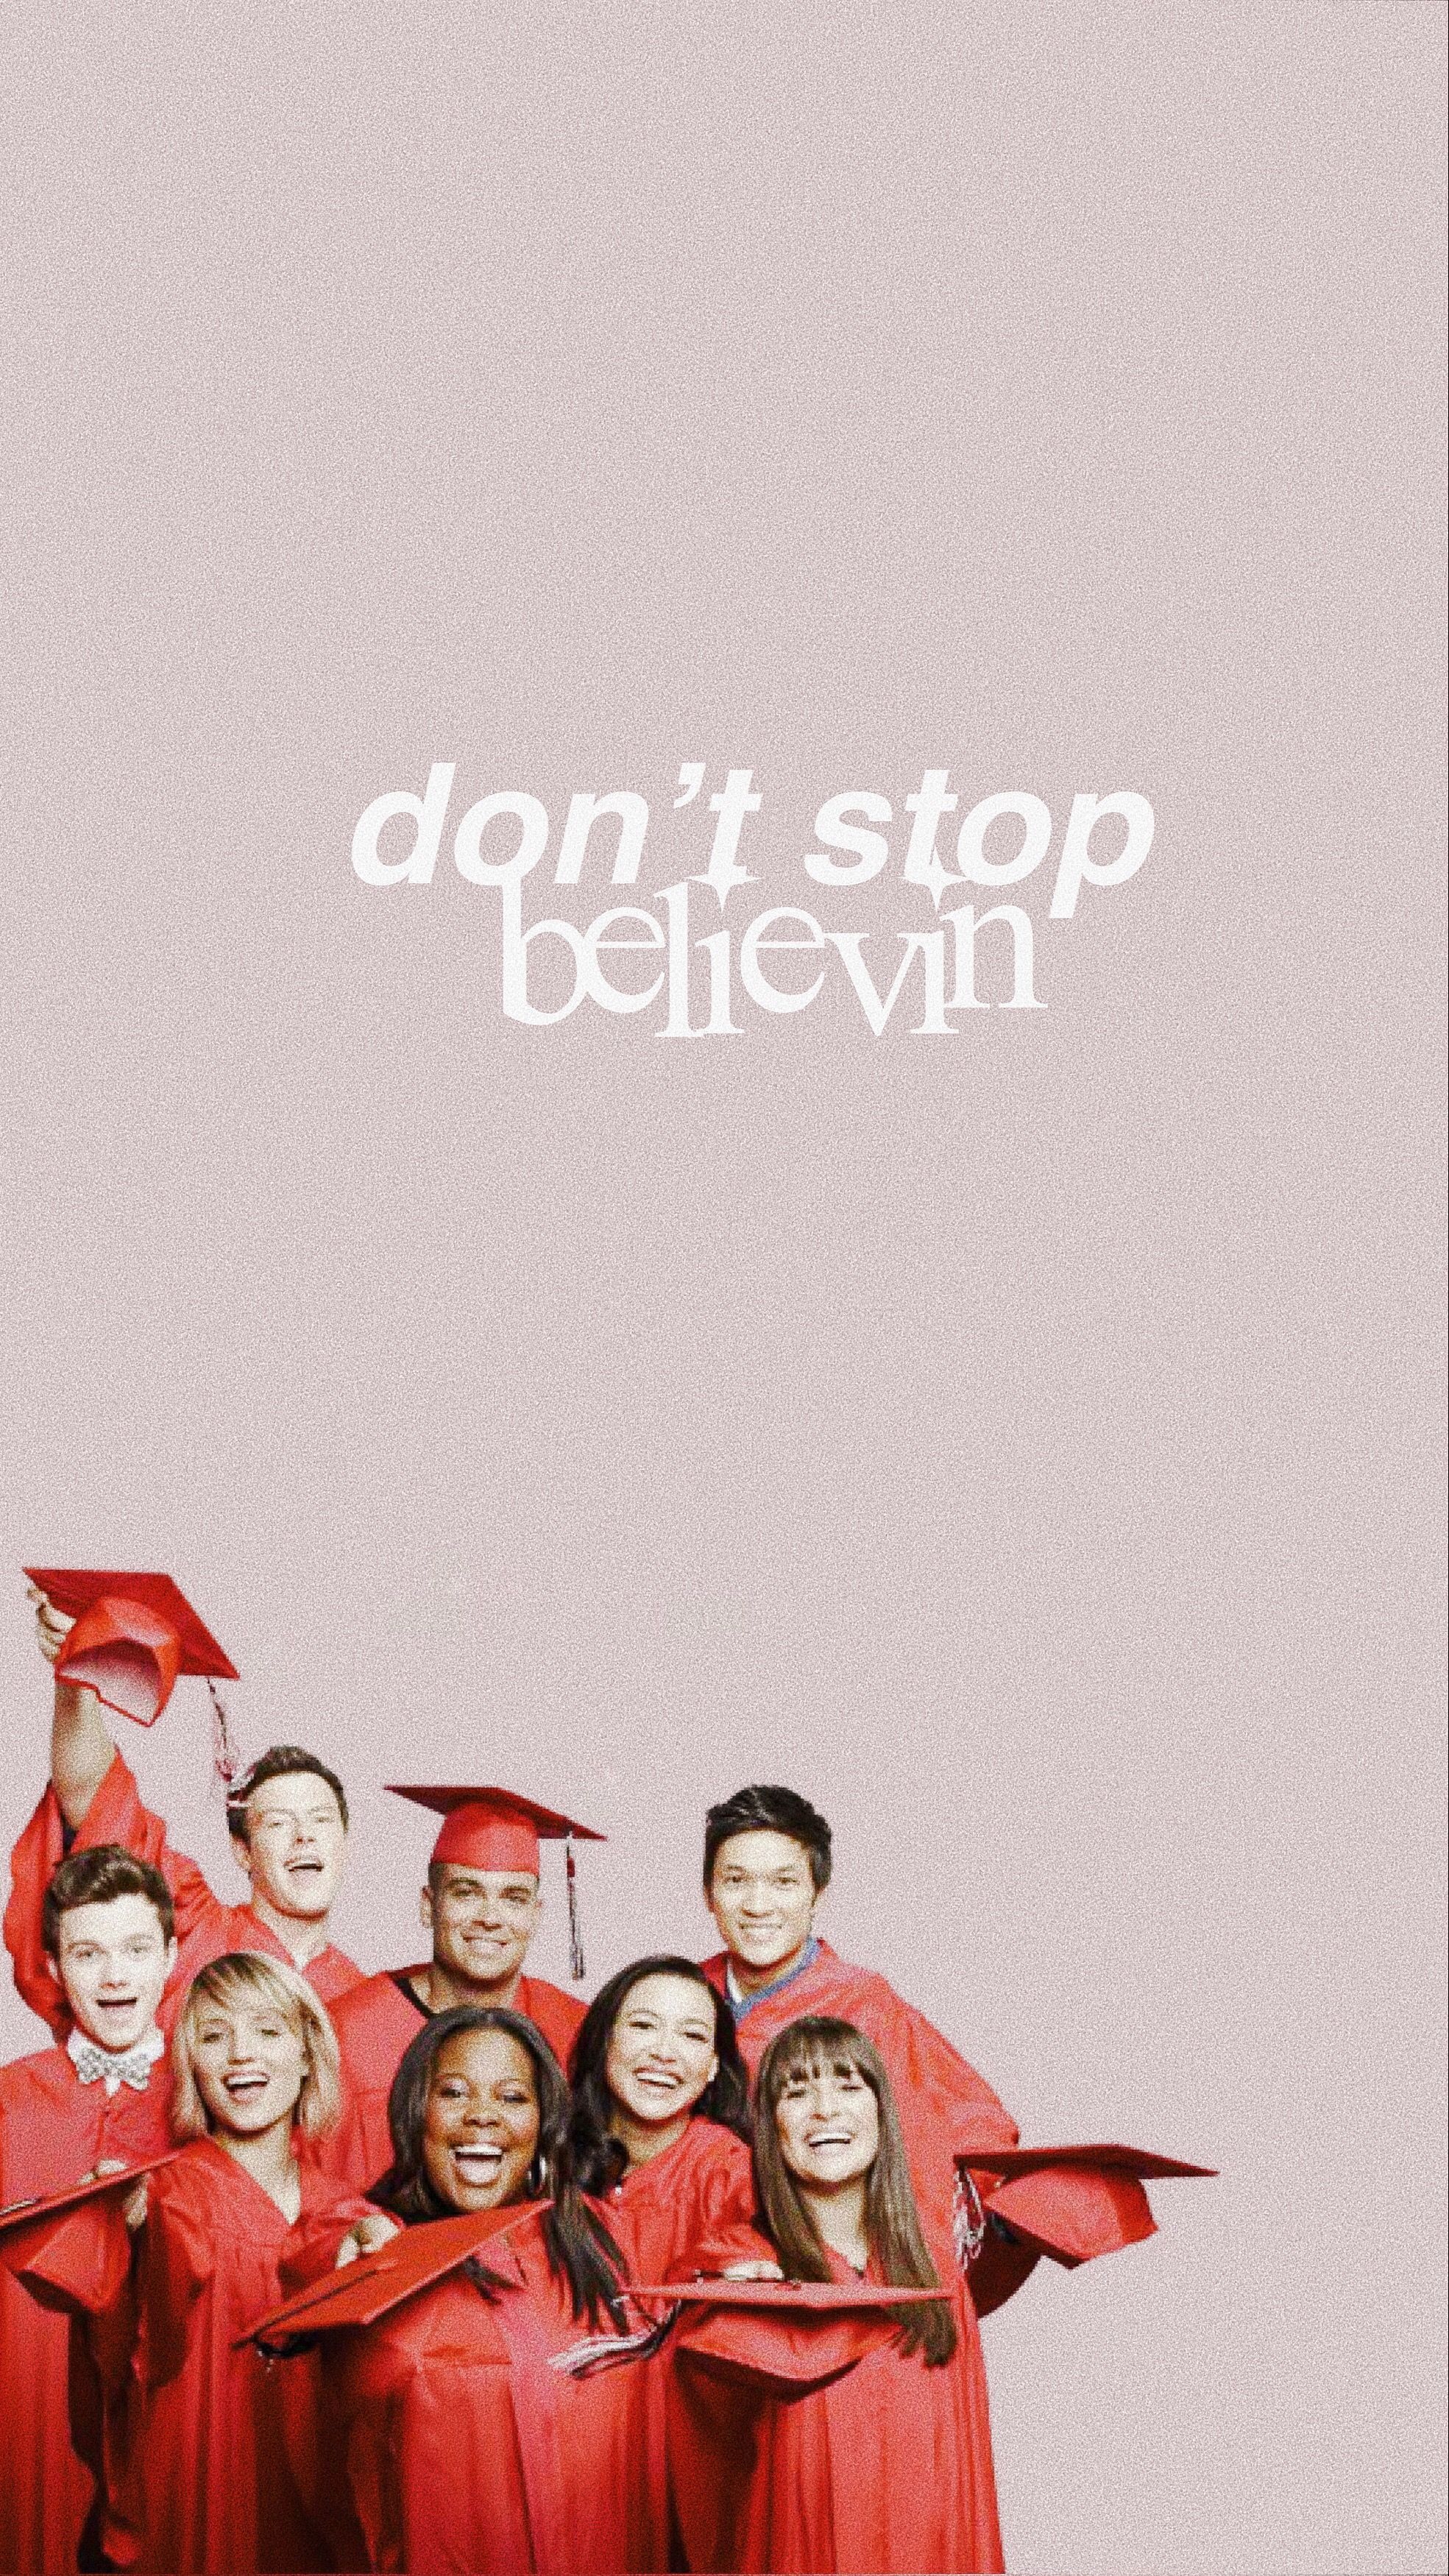 glee wallpaper. Glee quotes, Glee cast, Glee